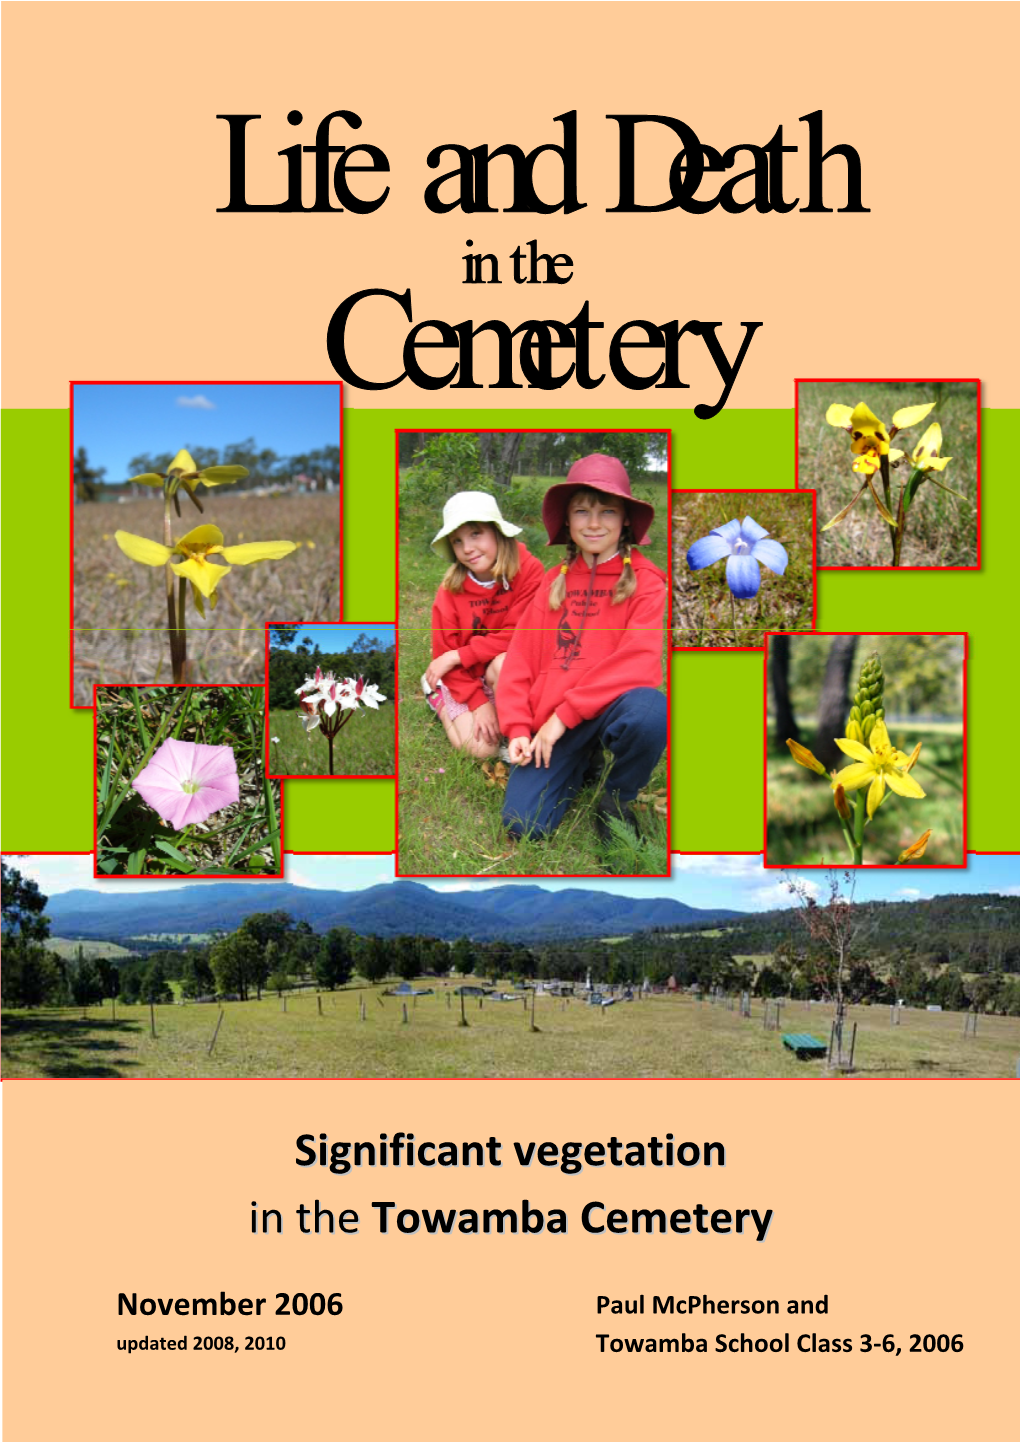 Download the Towamba Cemetery Vegetation Report